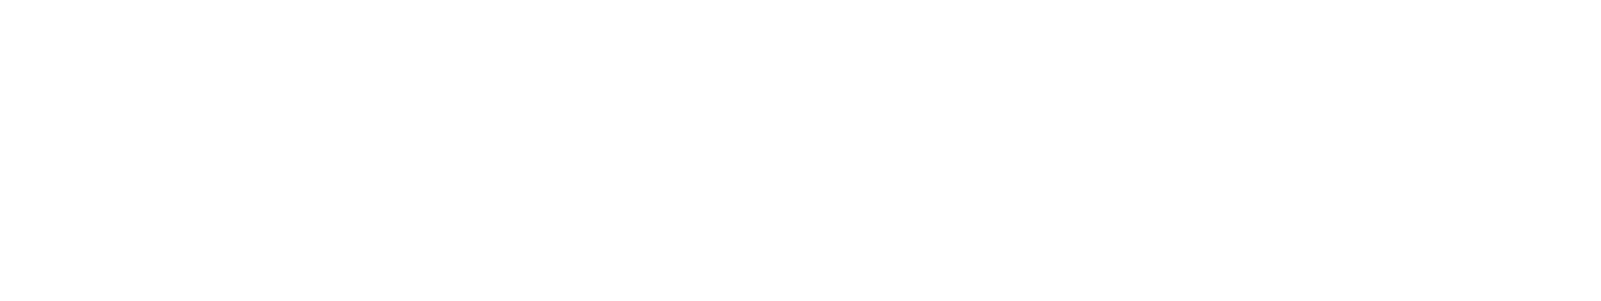 Erker Law Firm